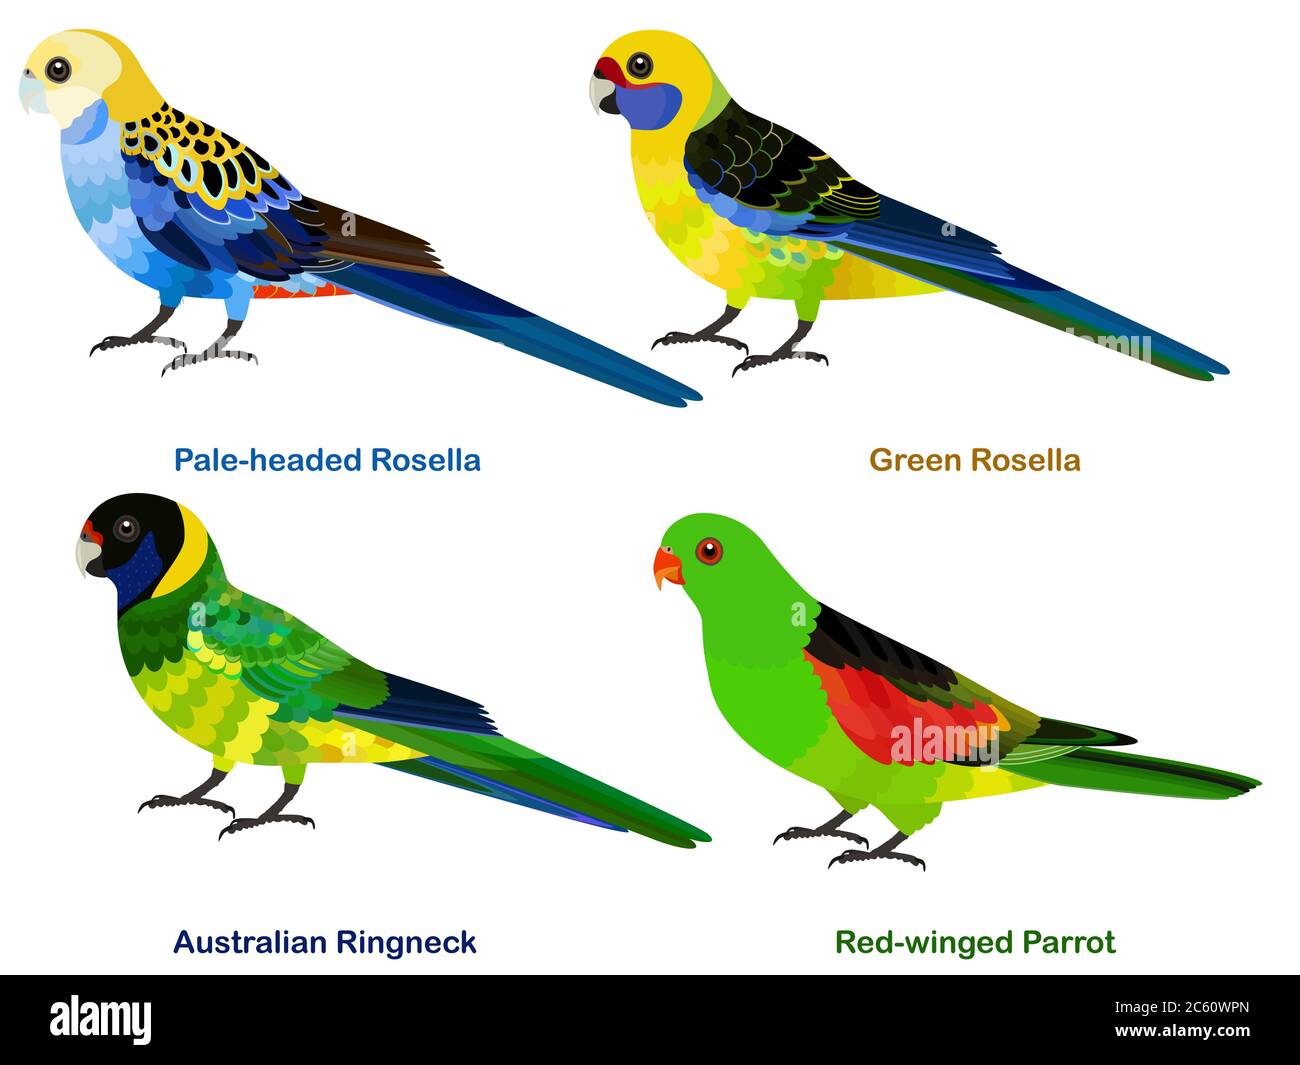 Cute Australia parrots, Rosella bird vector illustration set, Pale-headed Rosella, Green Rosella, Australian Ringneck, Red-winged Parrot, Colorful bir Stock Vector